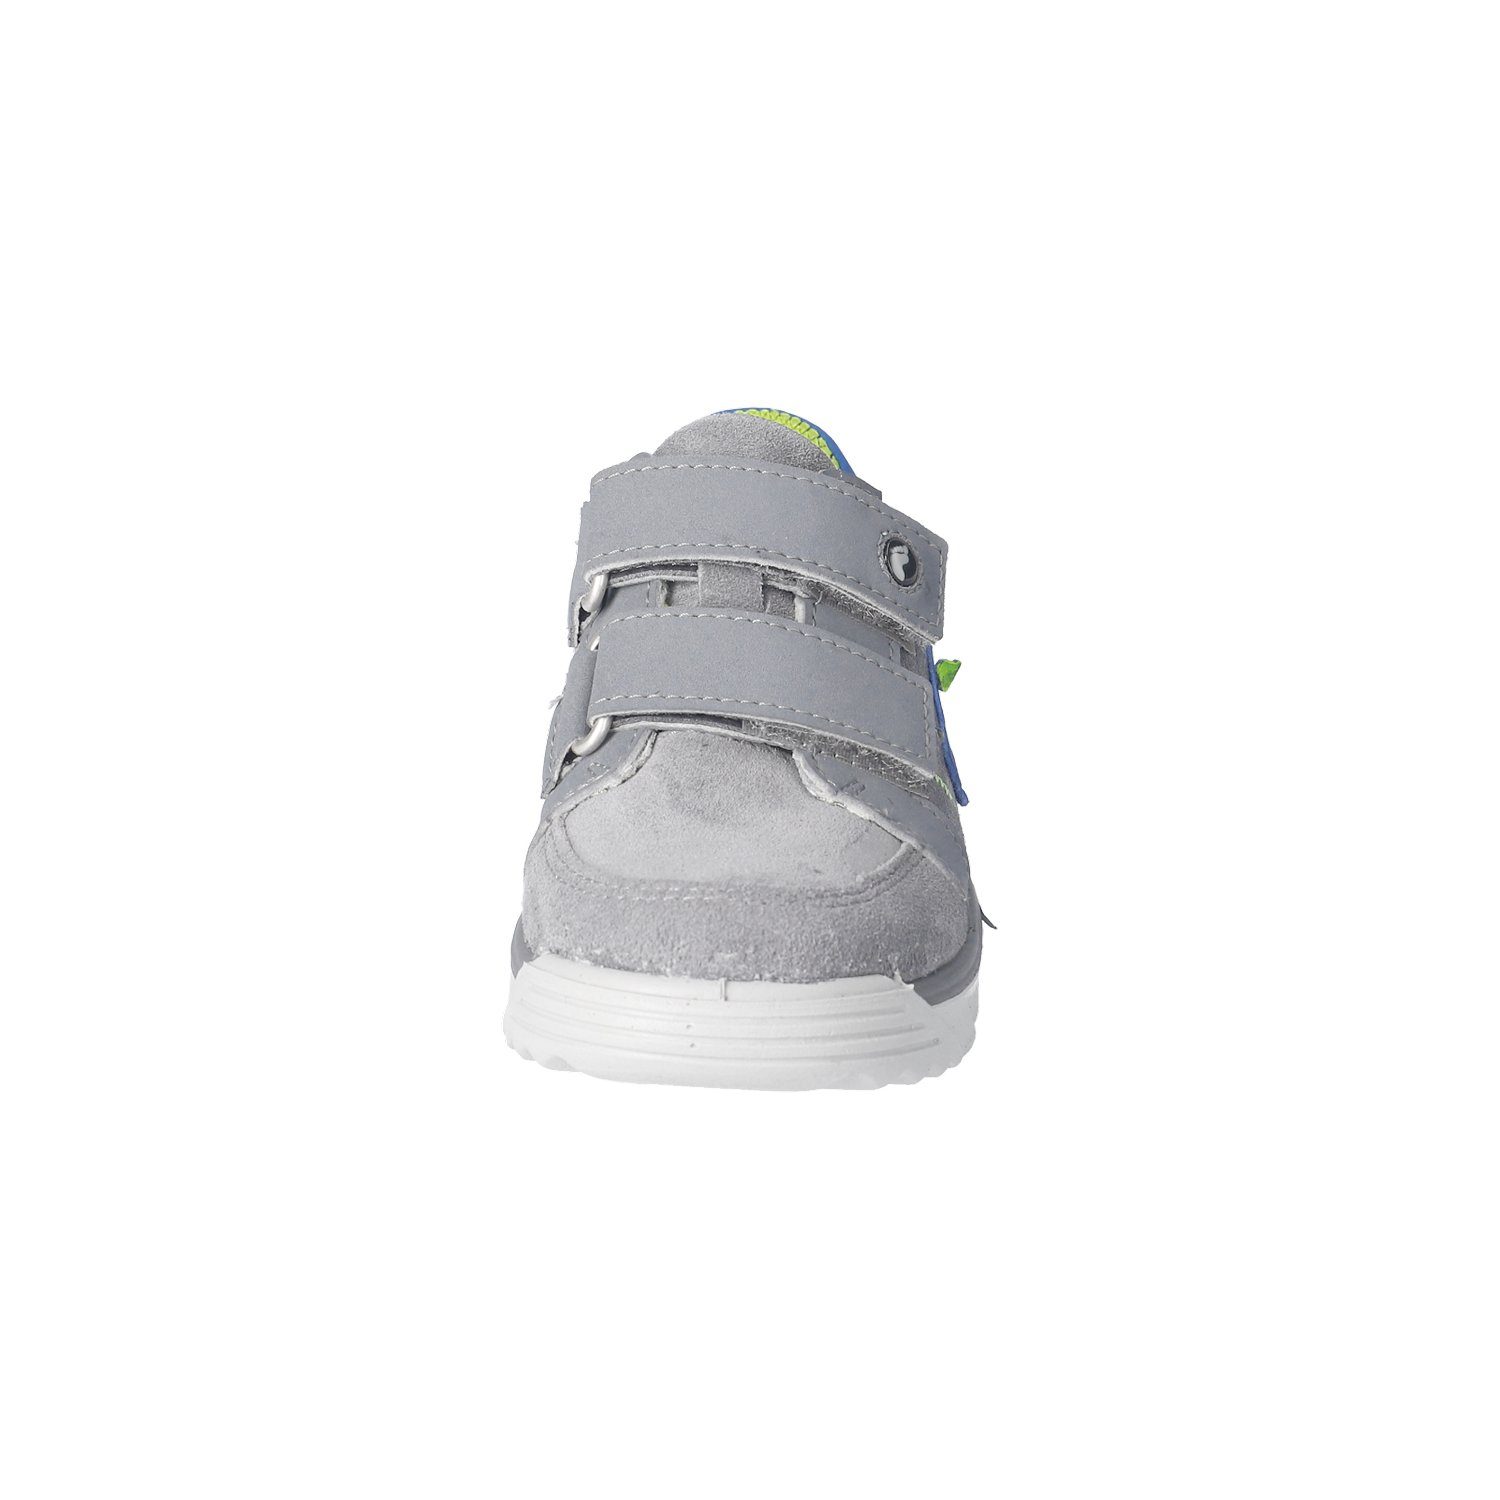 (450) Ricosta Sneaker grau